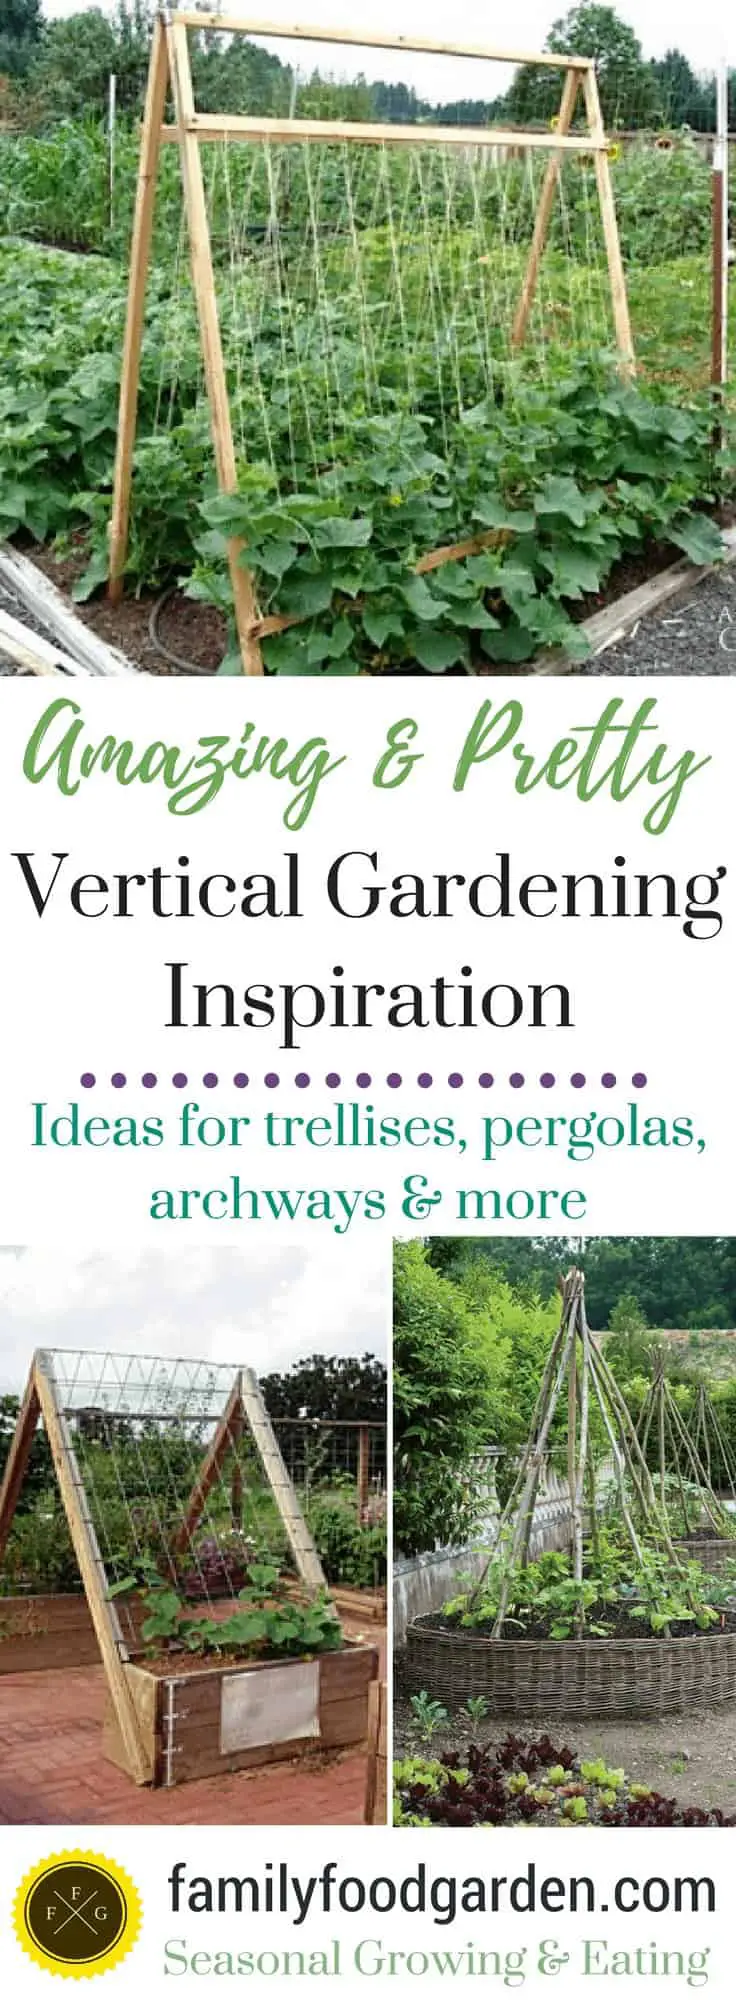 FamilyFoodGarden: Amazing & Pretty Vertical Gardening Inspiration